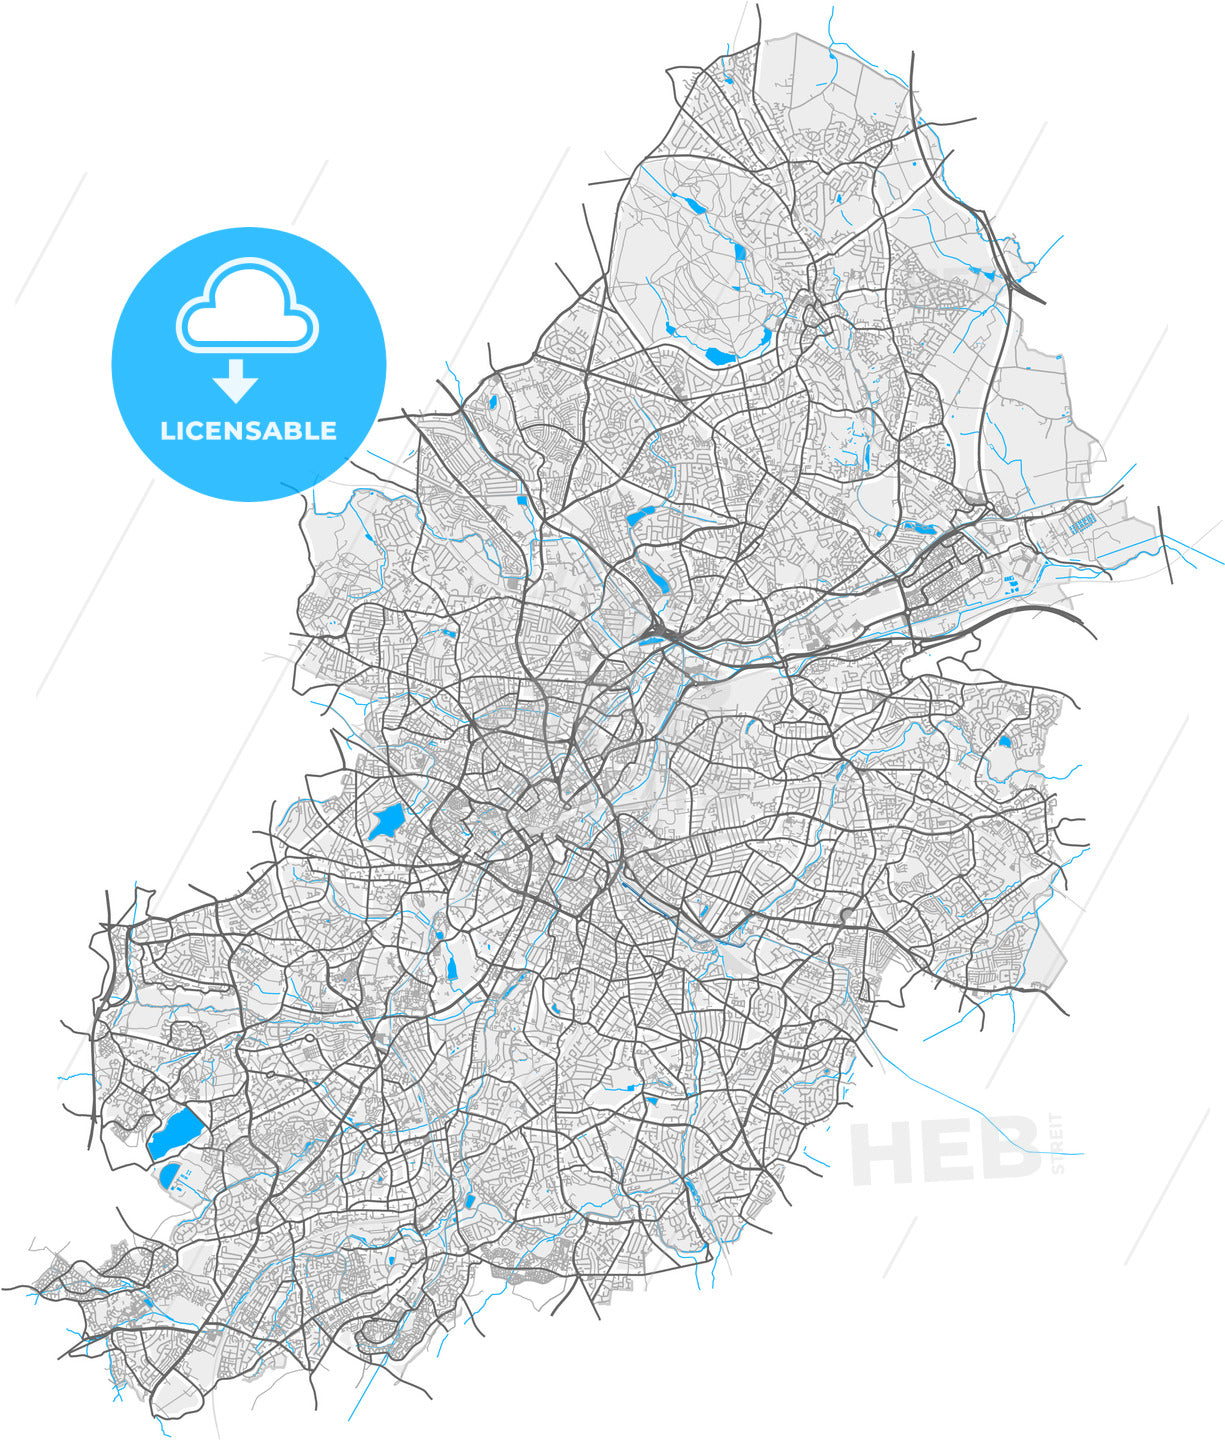 Birmingham, West Midlands, England, high quality vector map